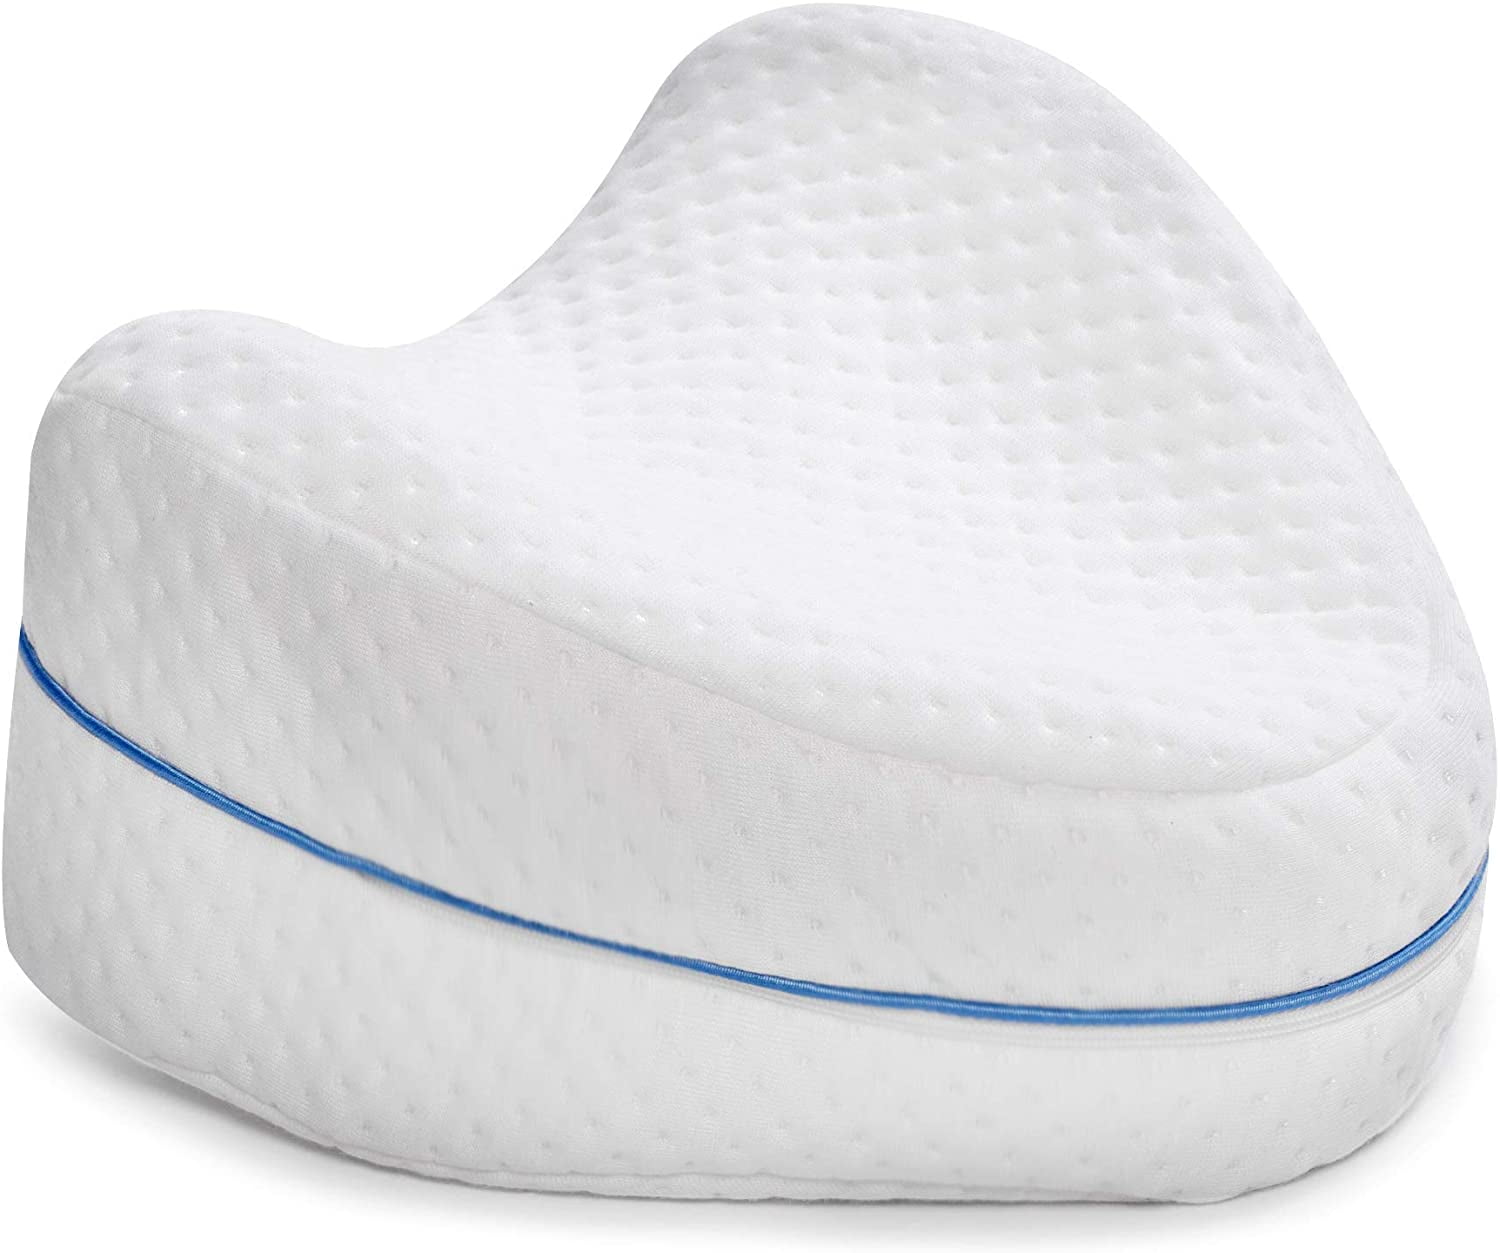 Linear Leg Pillow Ventilated Memory Foam Spine Hips Back Alignment Sleep Comfort 